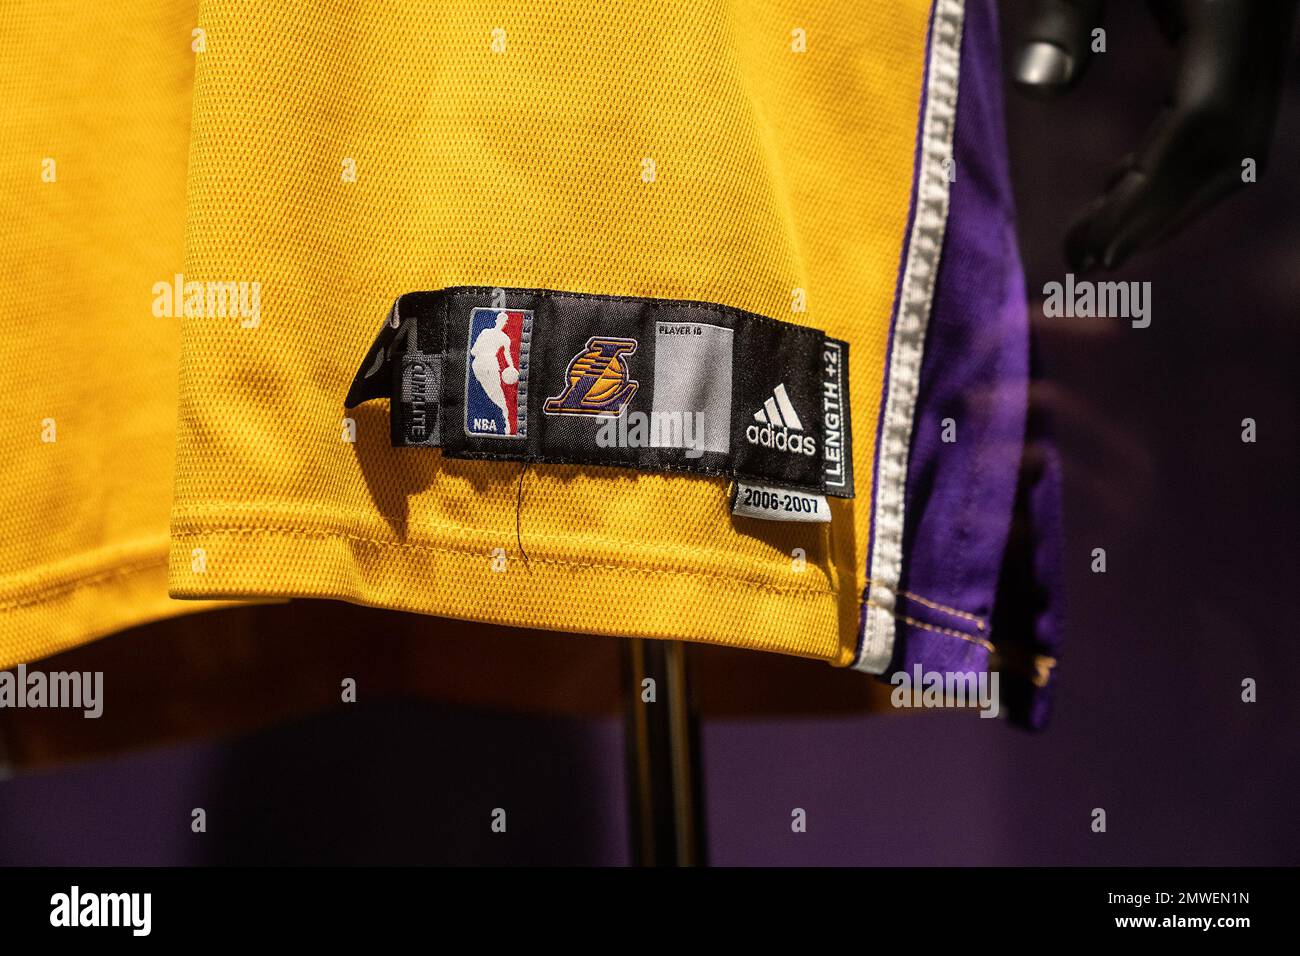 LA Lakers Lonzo Ball Jersey Adidas Swingman Large Length+2 NBA